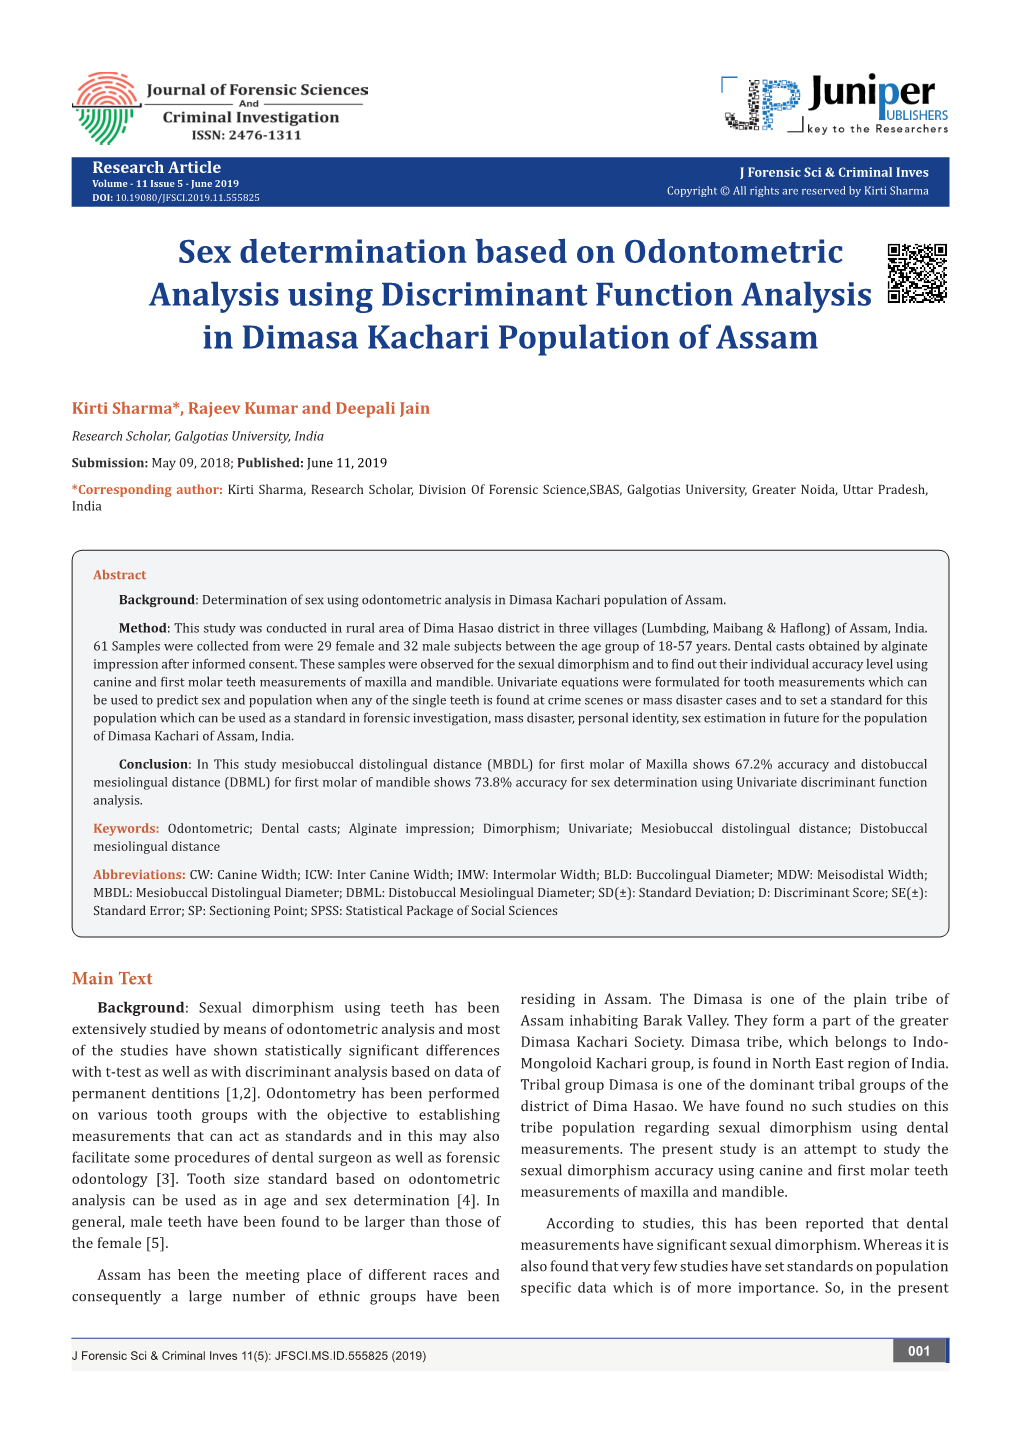 Sex Determination Based on Odontometric Analysis Using Discriminant Function Analysis in Dimasa Kachari Population of Assam